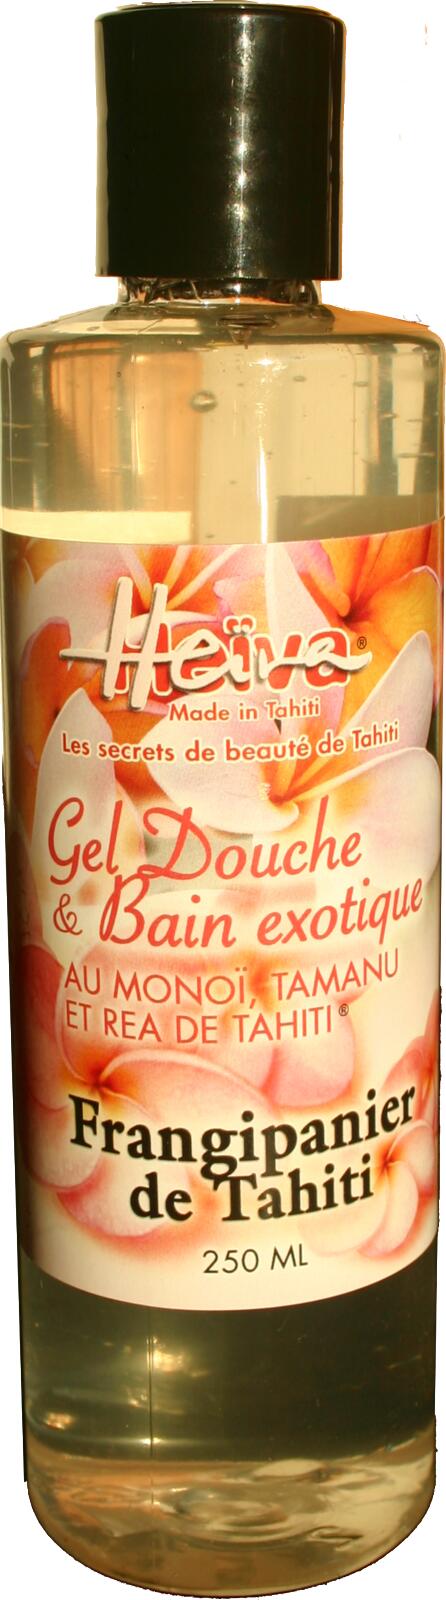 Gel Douche au Monoï de Tahiti parfum Frangipanier 250ml